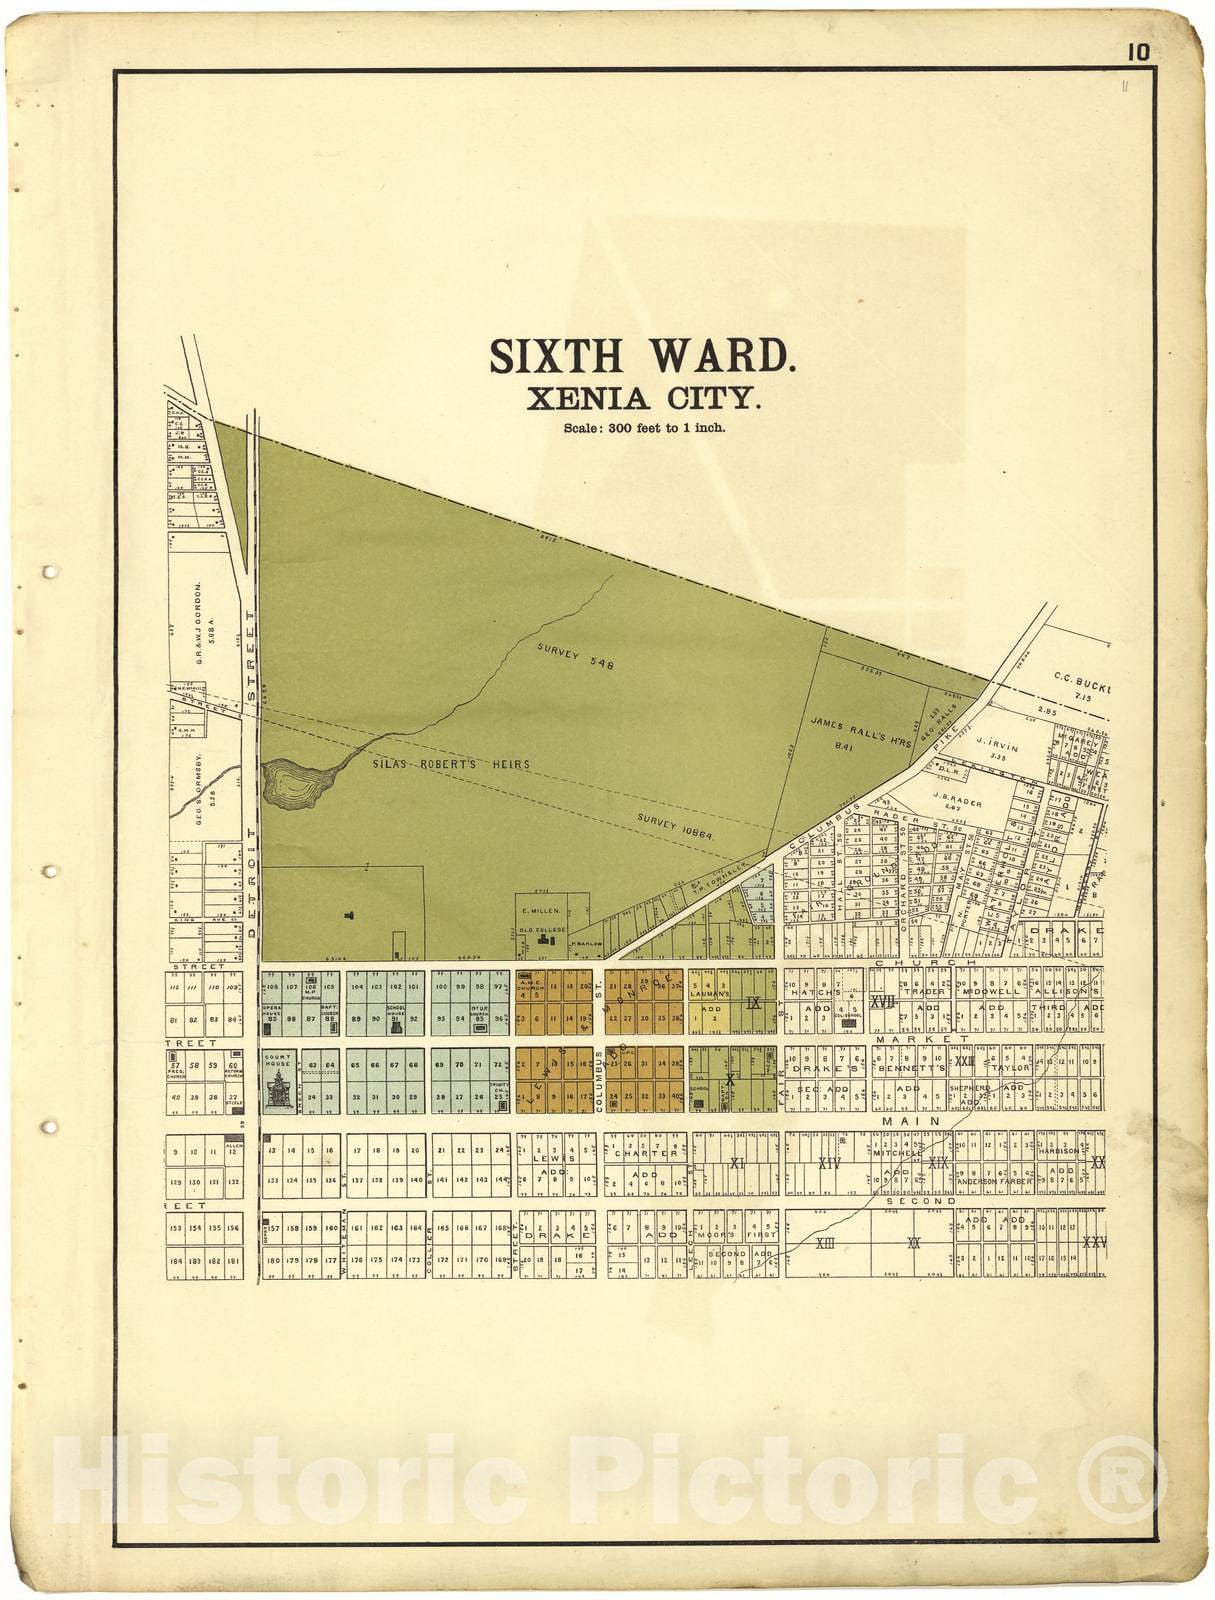 Historic 1896 Map - Riddell's Greene County Atlas, 1896. - Sixth Ward Xenia City - Riddell's Atlas of Greene County, Ohio :